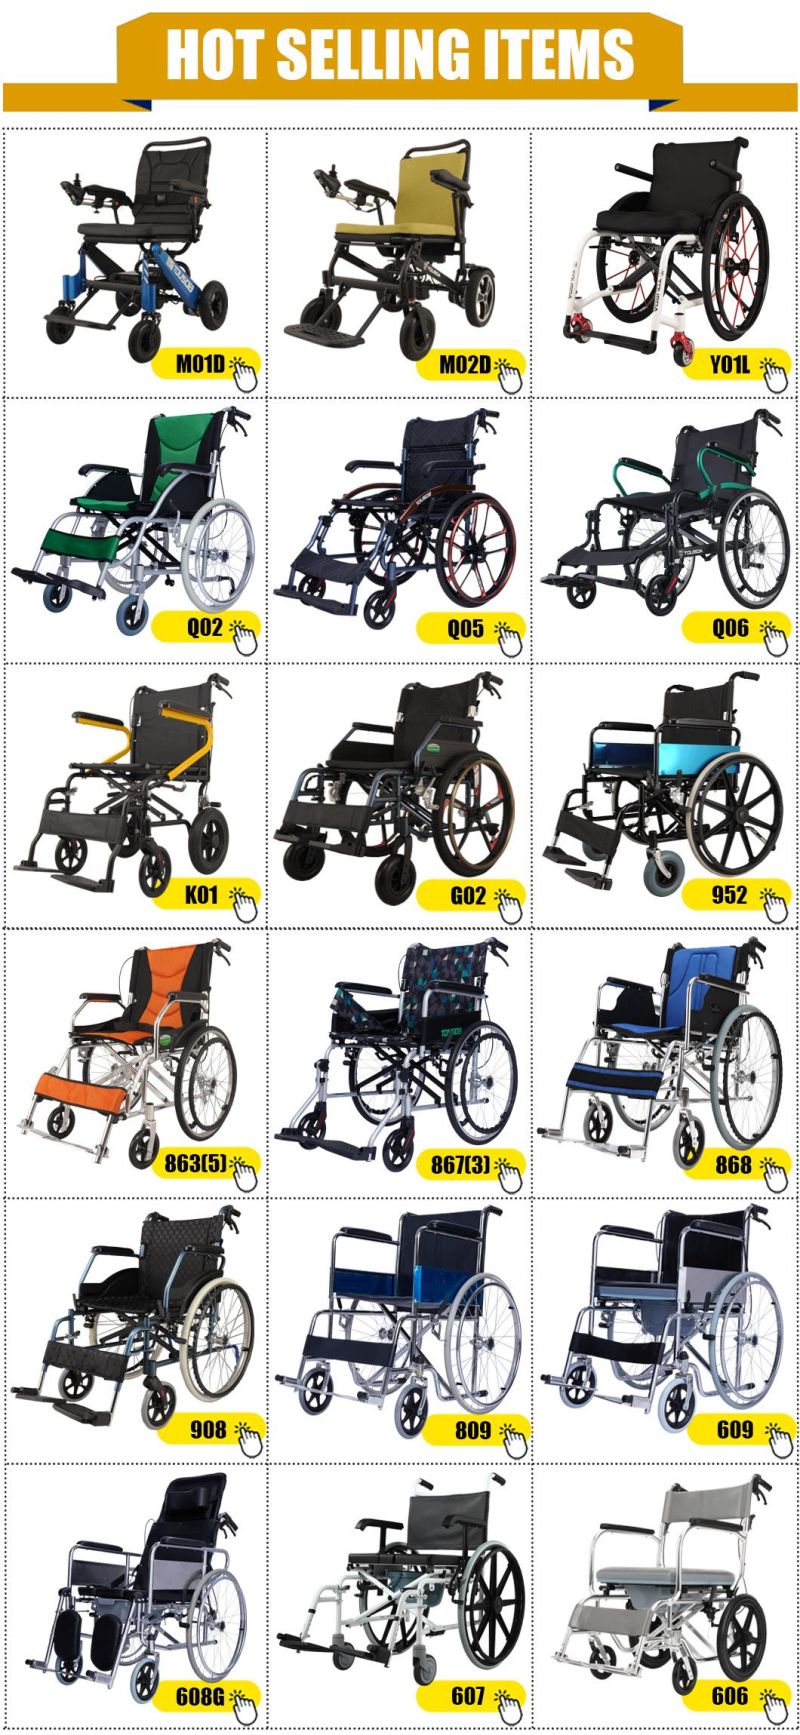 Aluminum Rollator Medical Walker Rolling Walker with Foldable Footrest for Disabled and Elderly